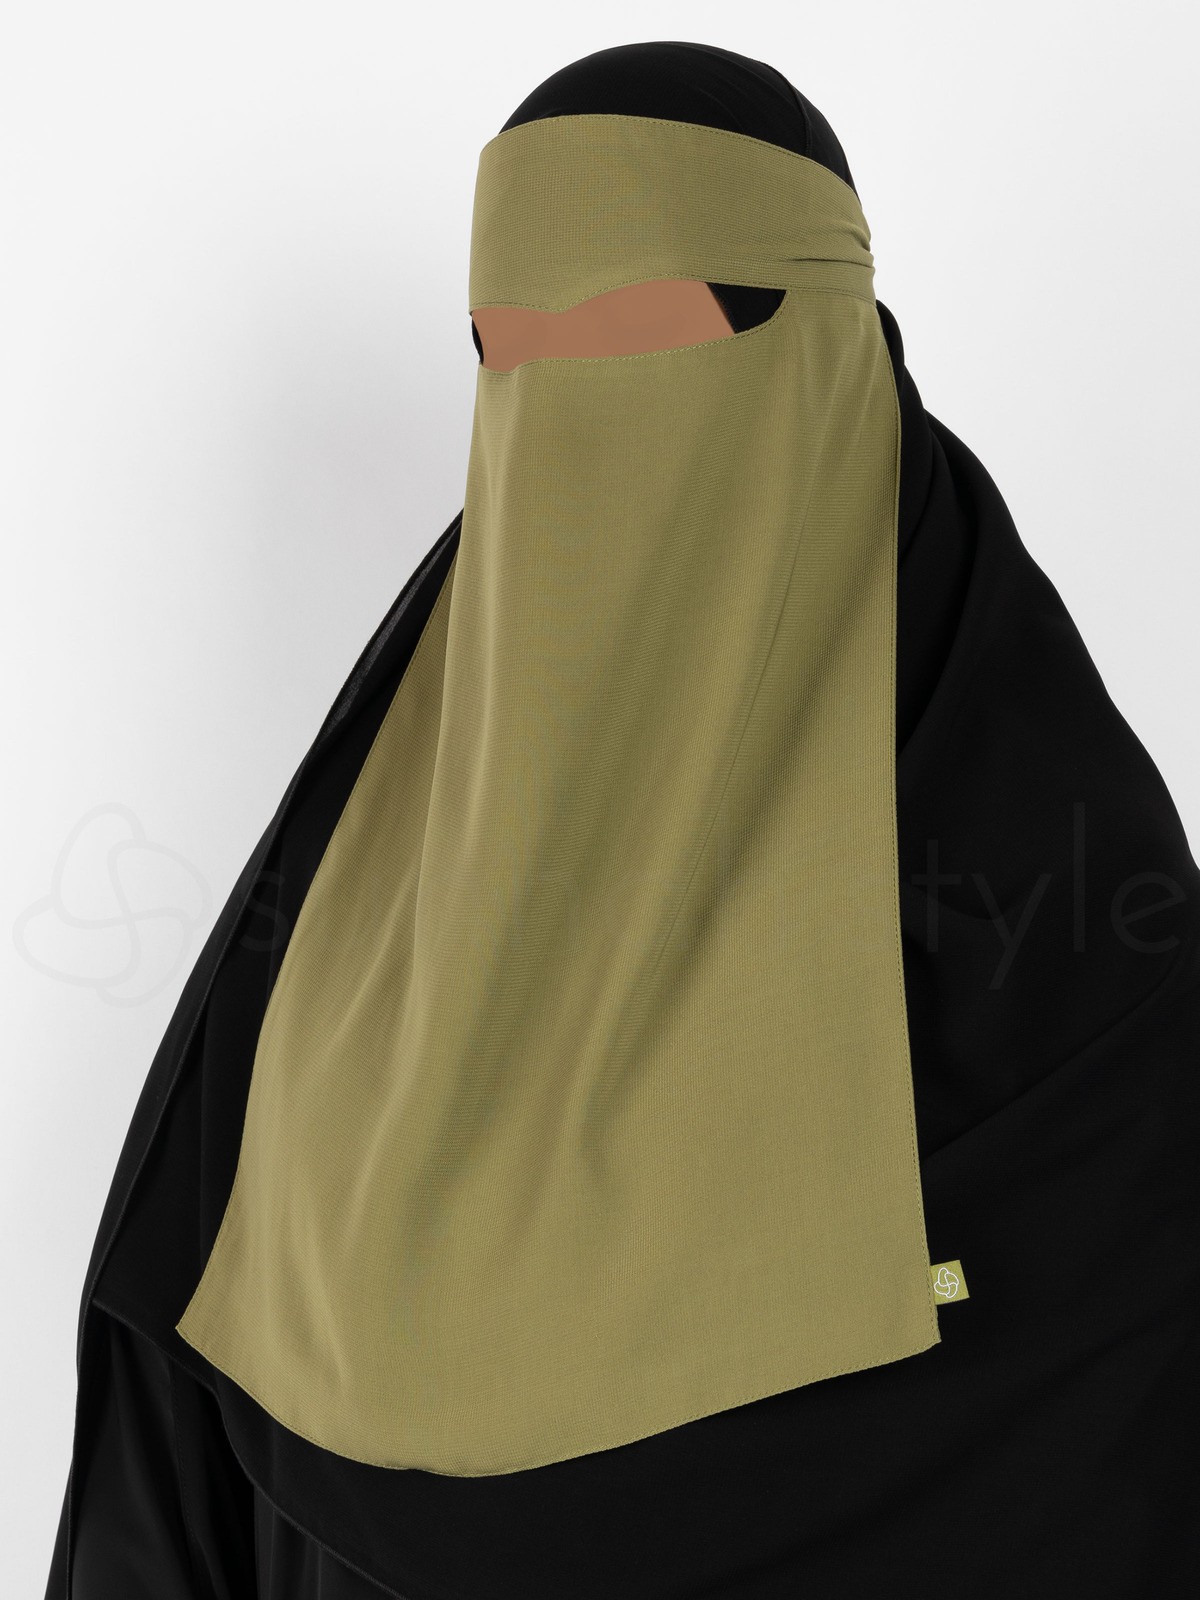 Sunnah Style - One Layer Widow's Peak Niqab (Moss)